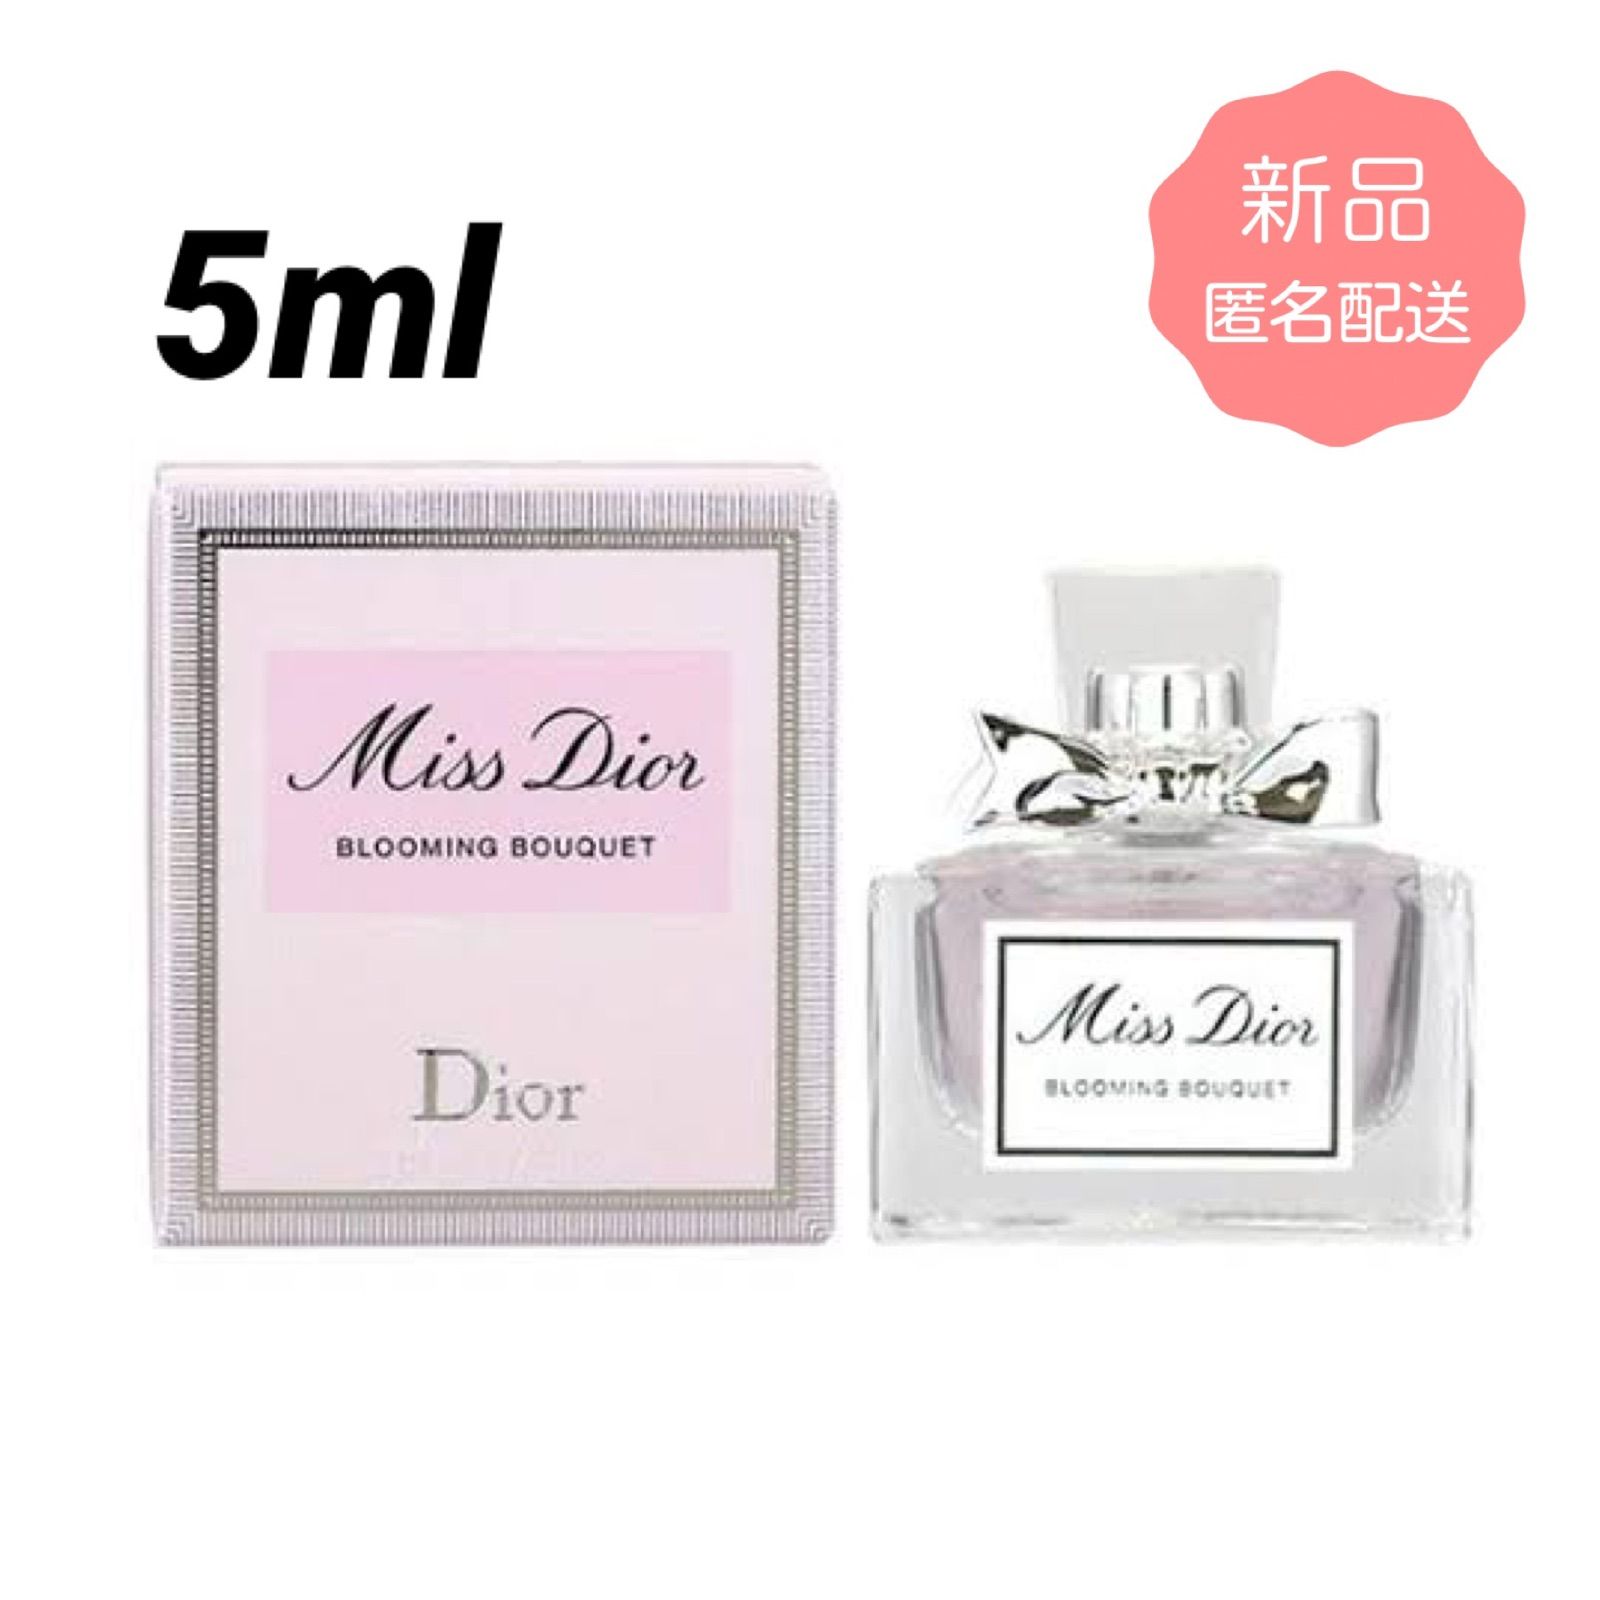 Dior ミニ香水